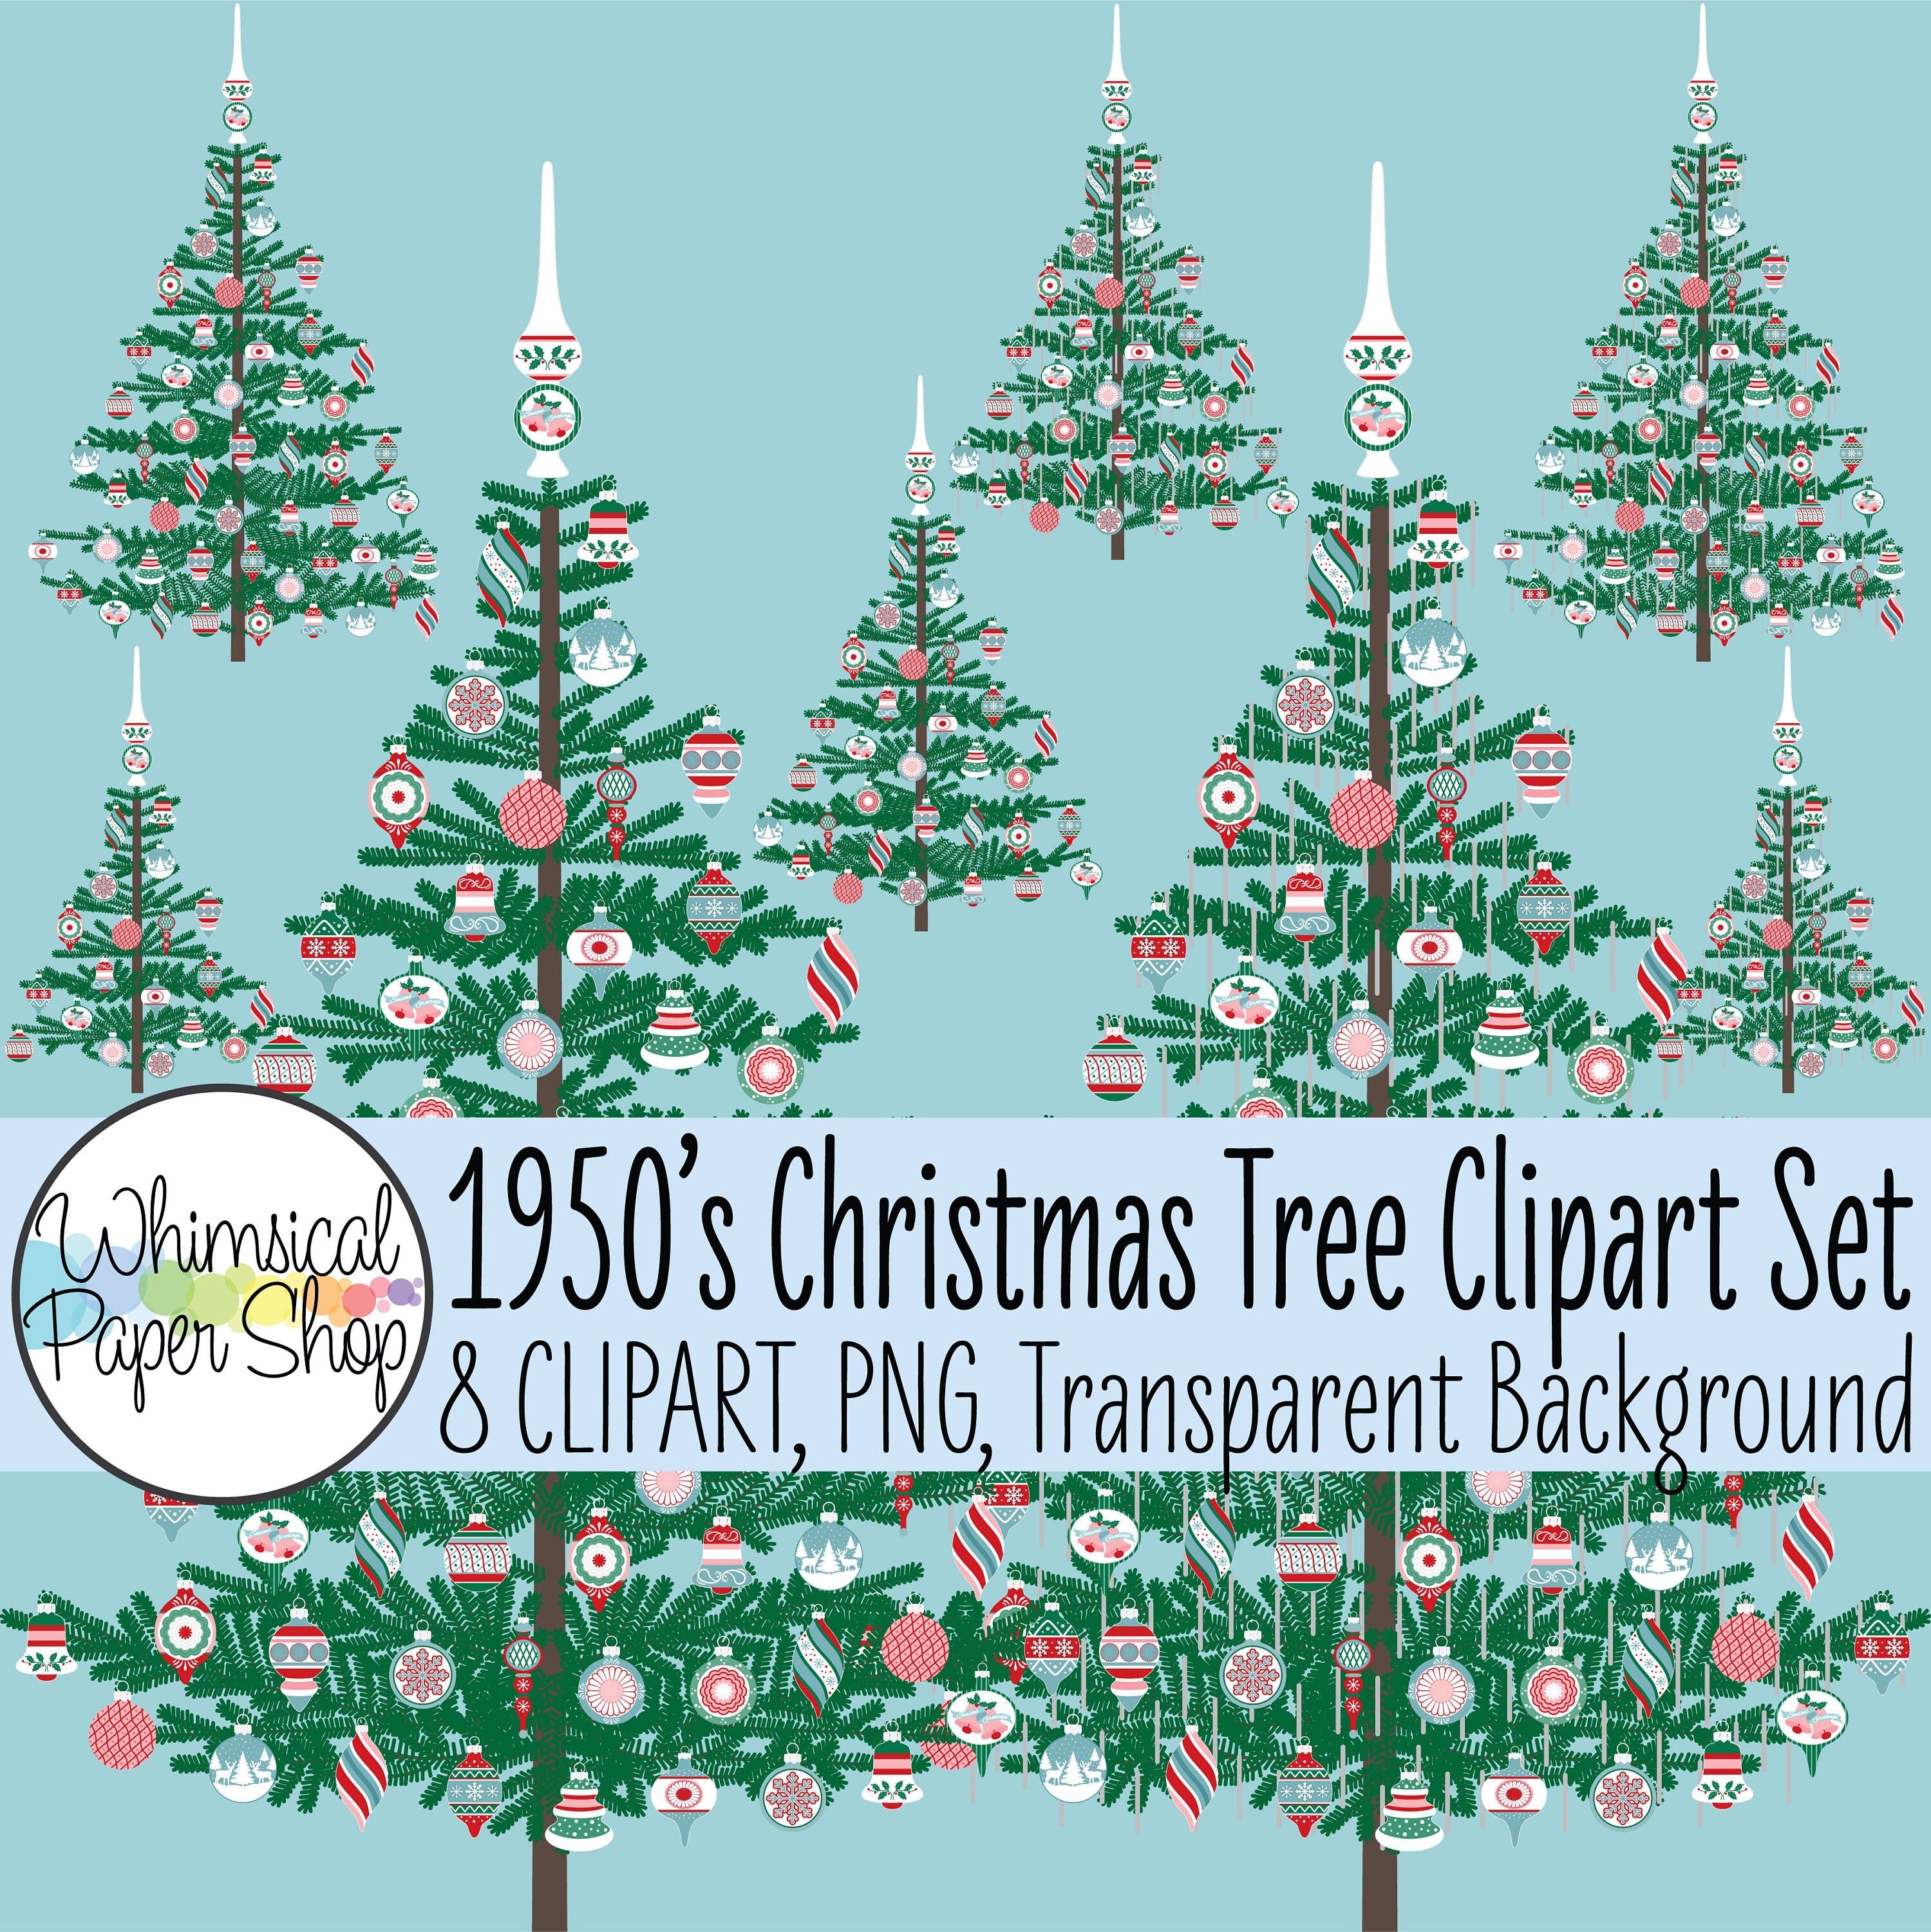 Christmas Tree PNG Clipart Set, retro Christmas png, retro Christmas clipart, vintage Christmas png, 1950s Christmas clipart, snowy tree png